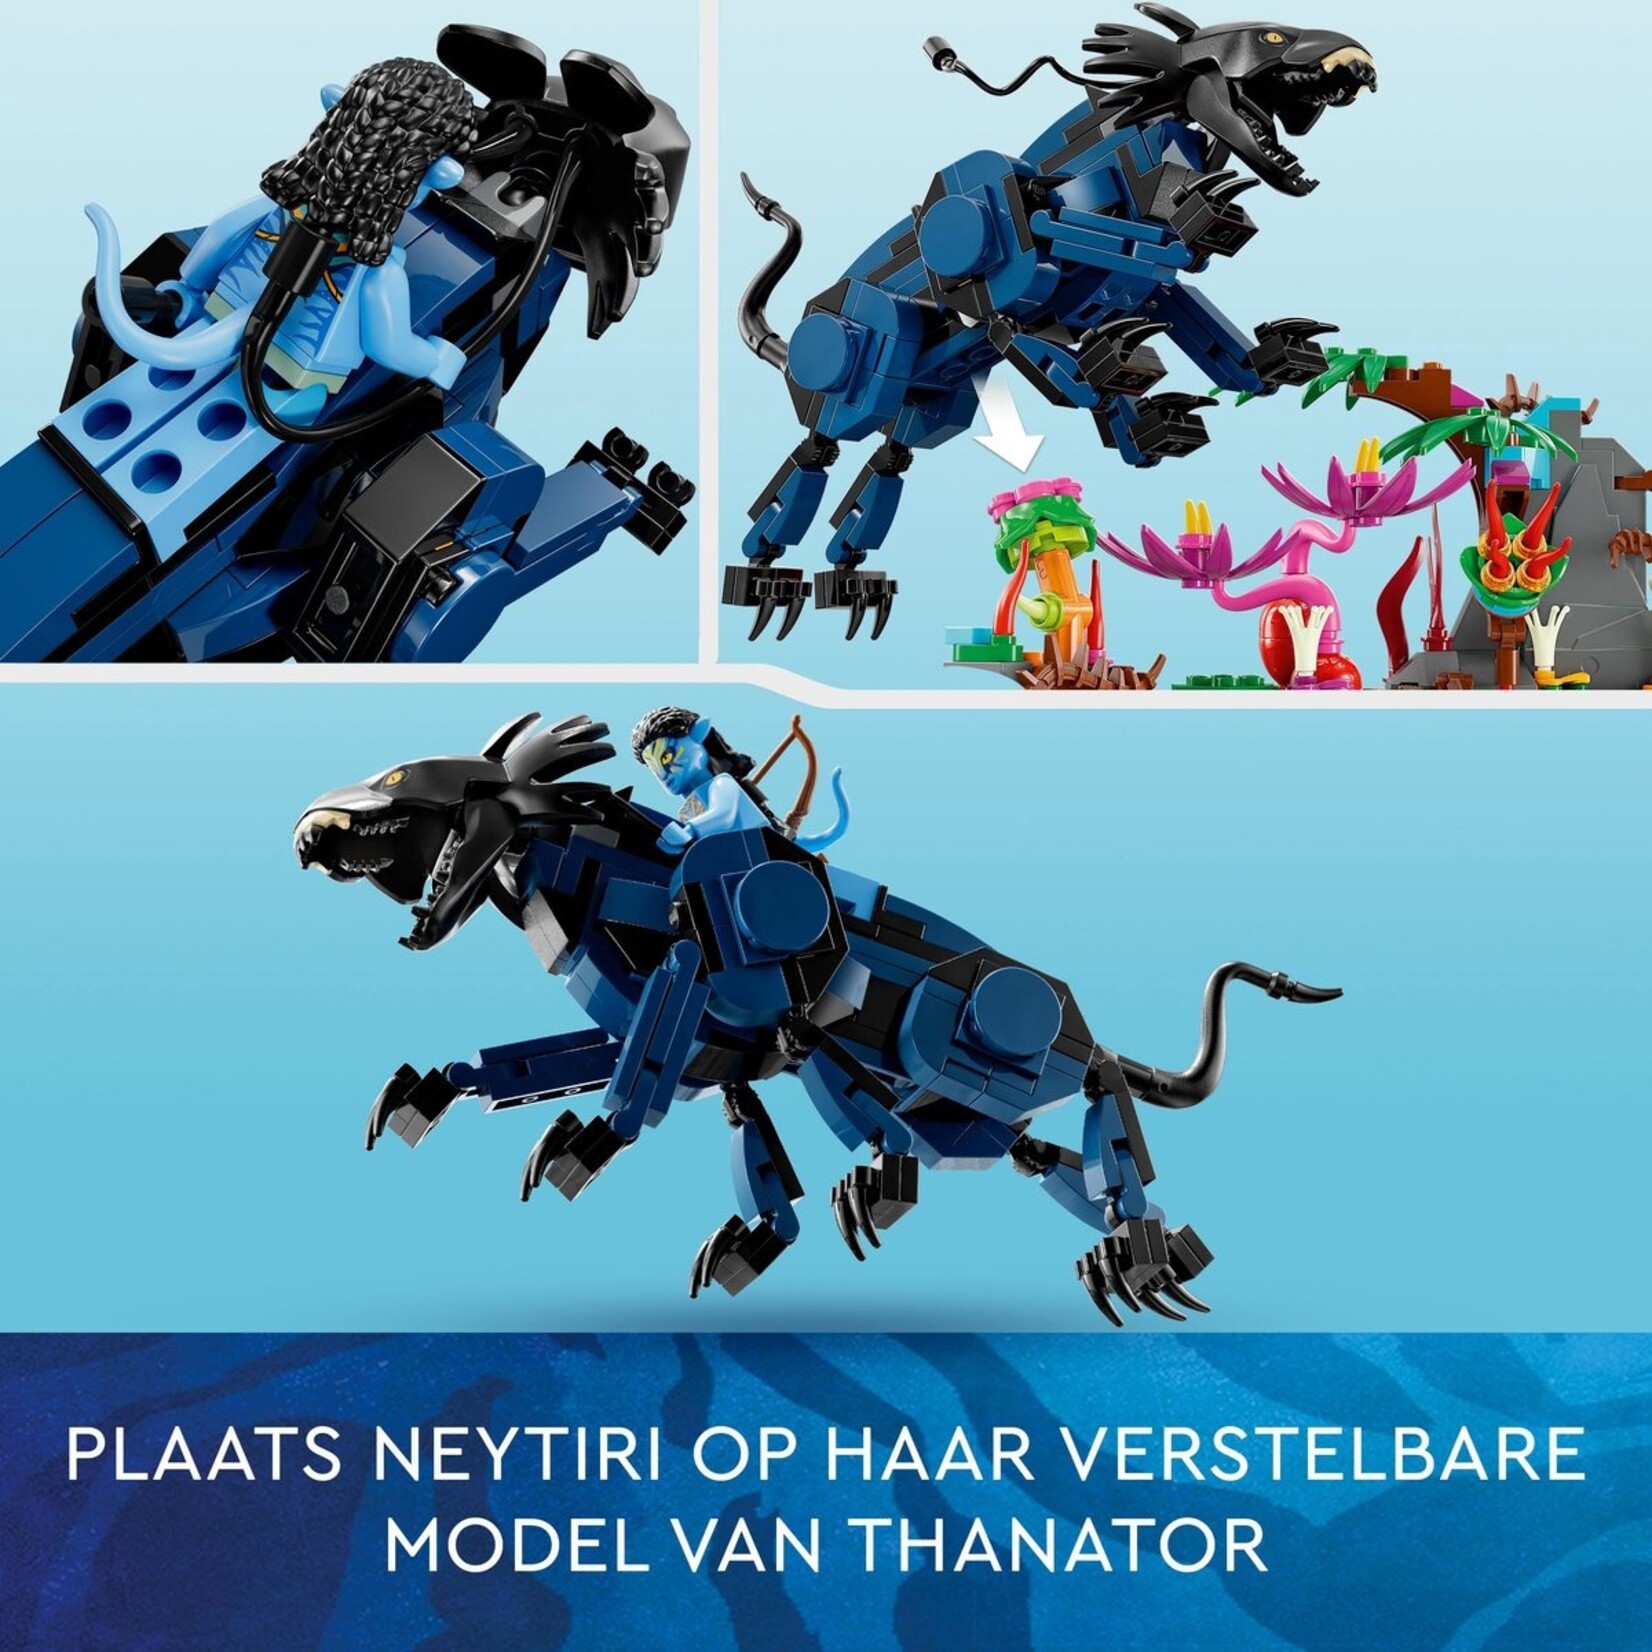 LEGO LEGO Avatar Neytiri & Thanator vs. AMP Suit Quaritch (75571)